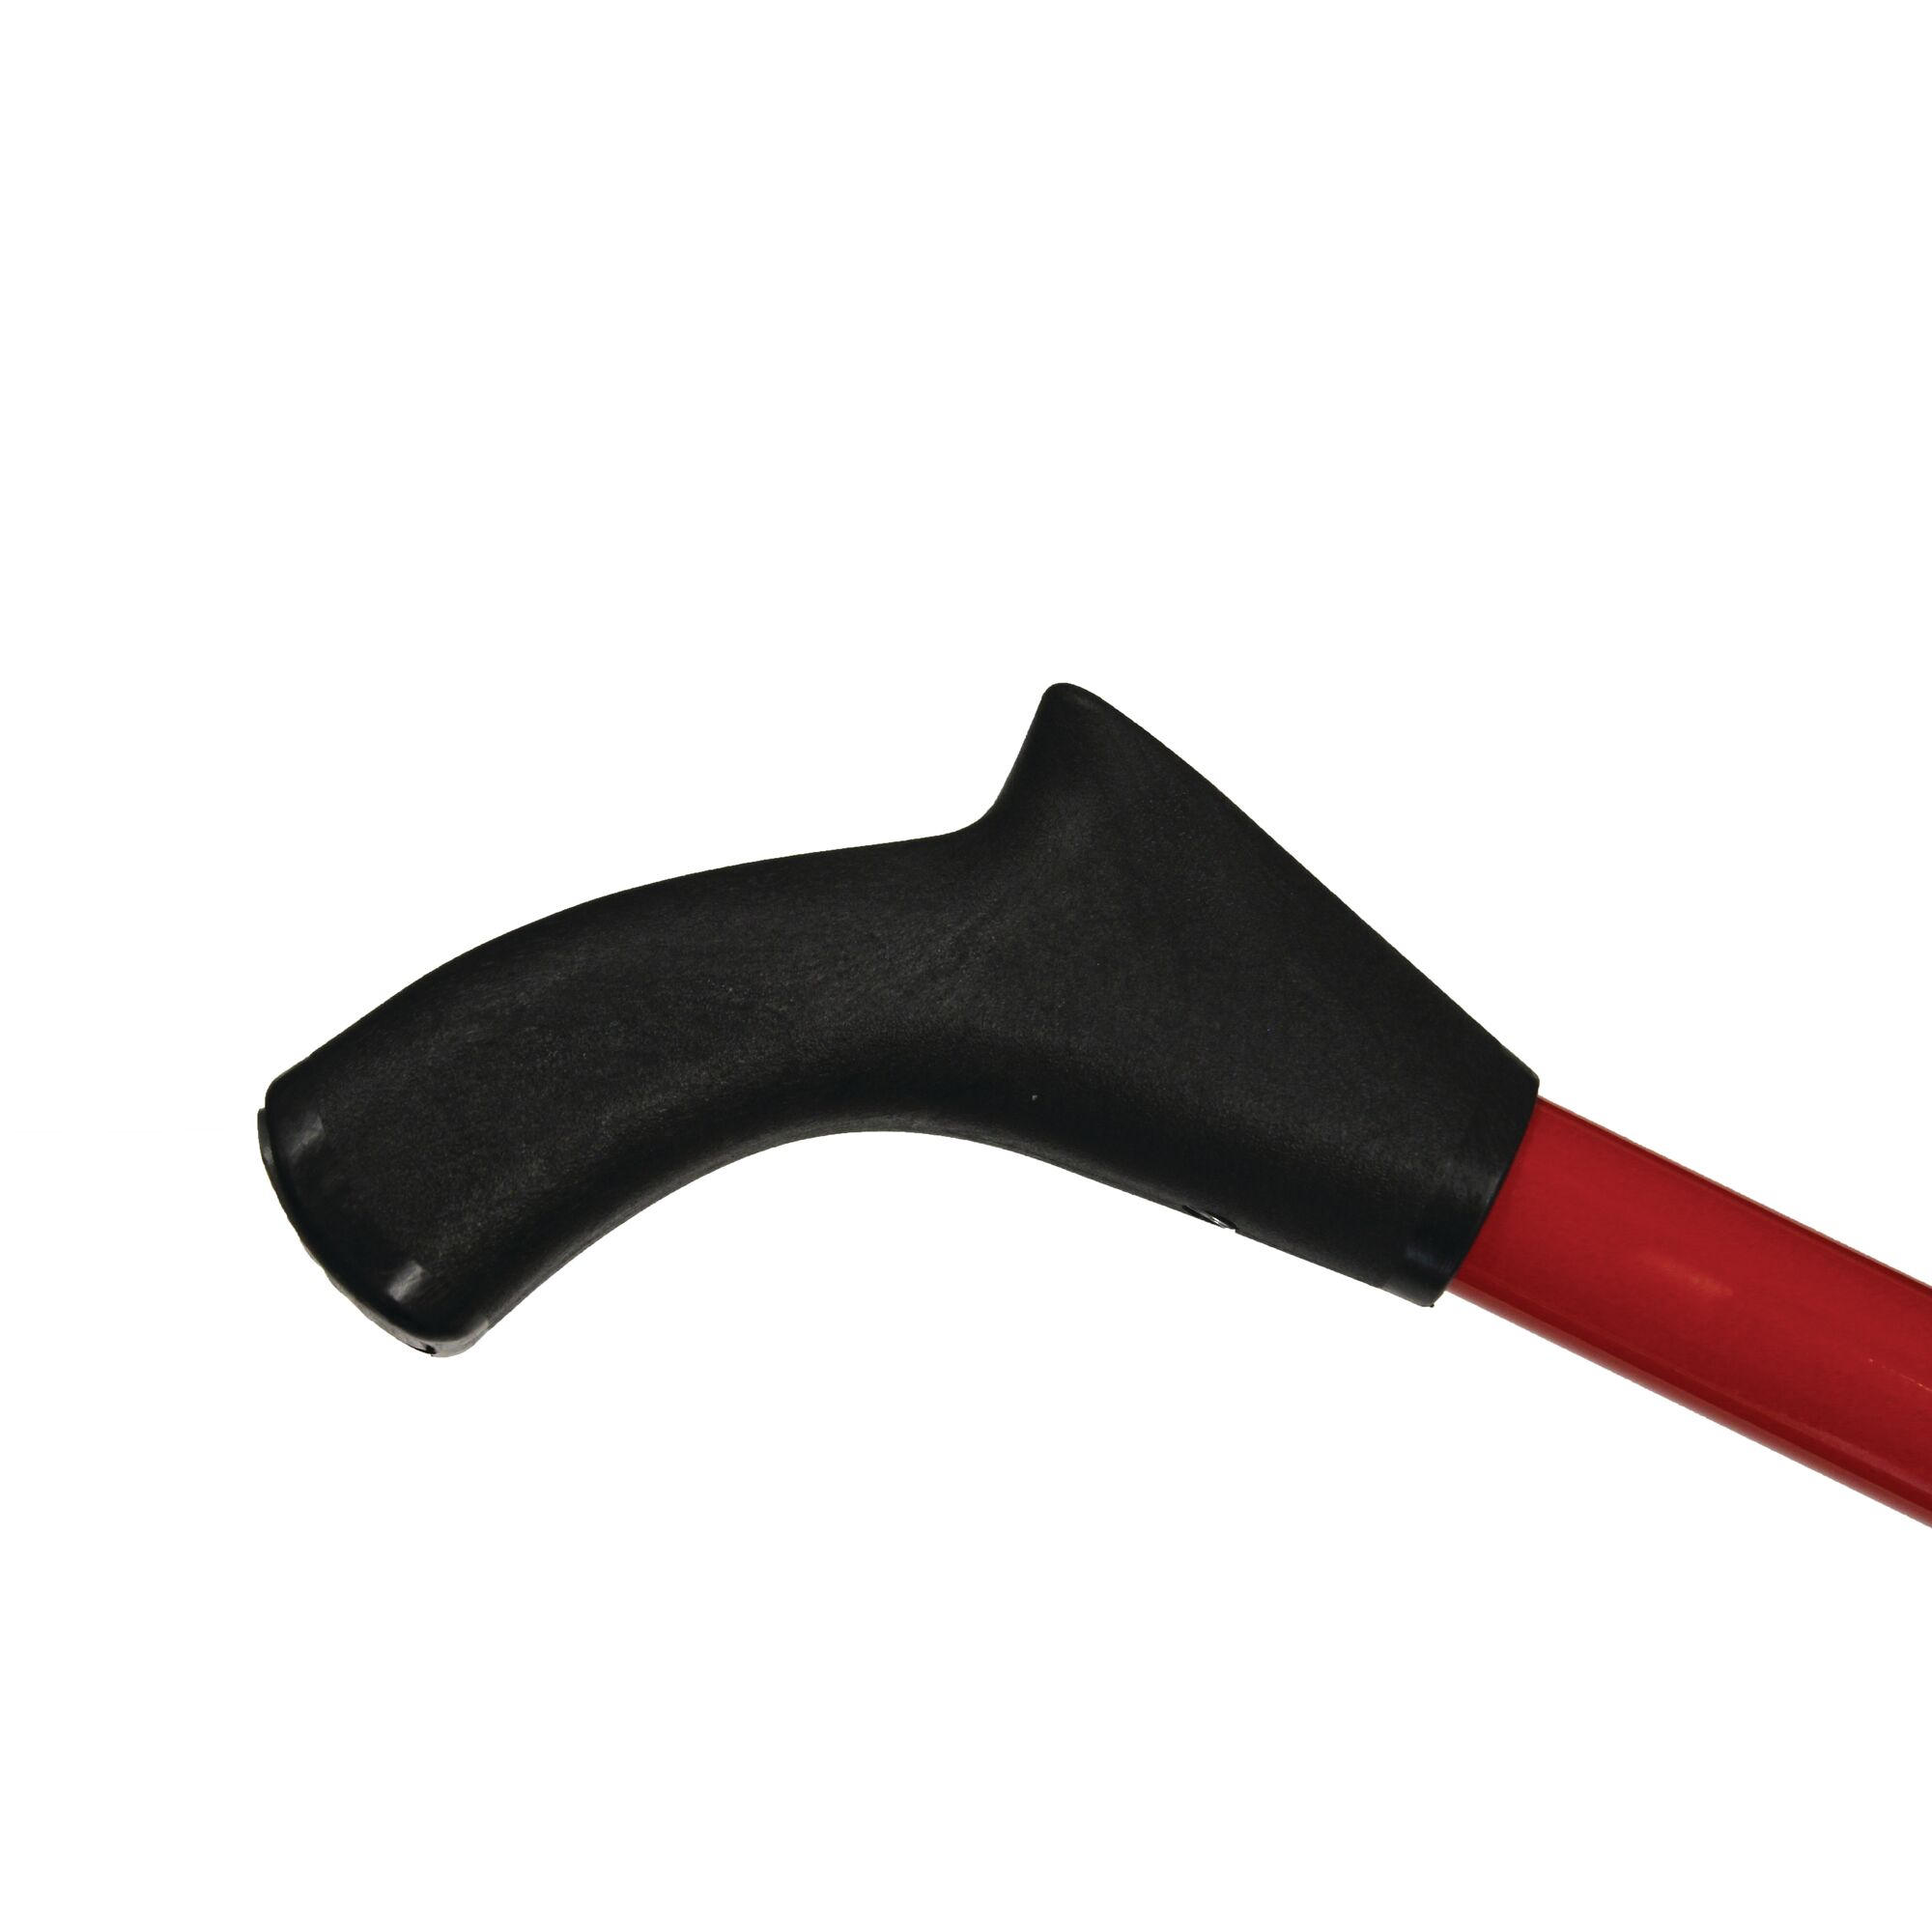 Profile of 24 inch heavy duty push broom.